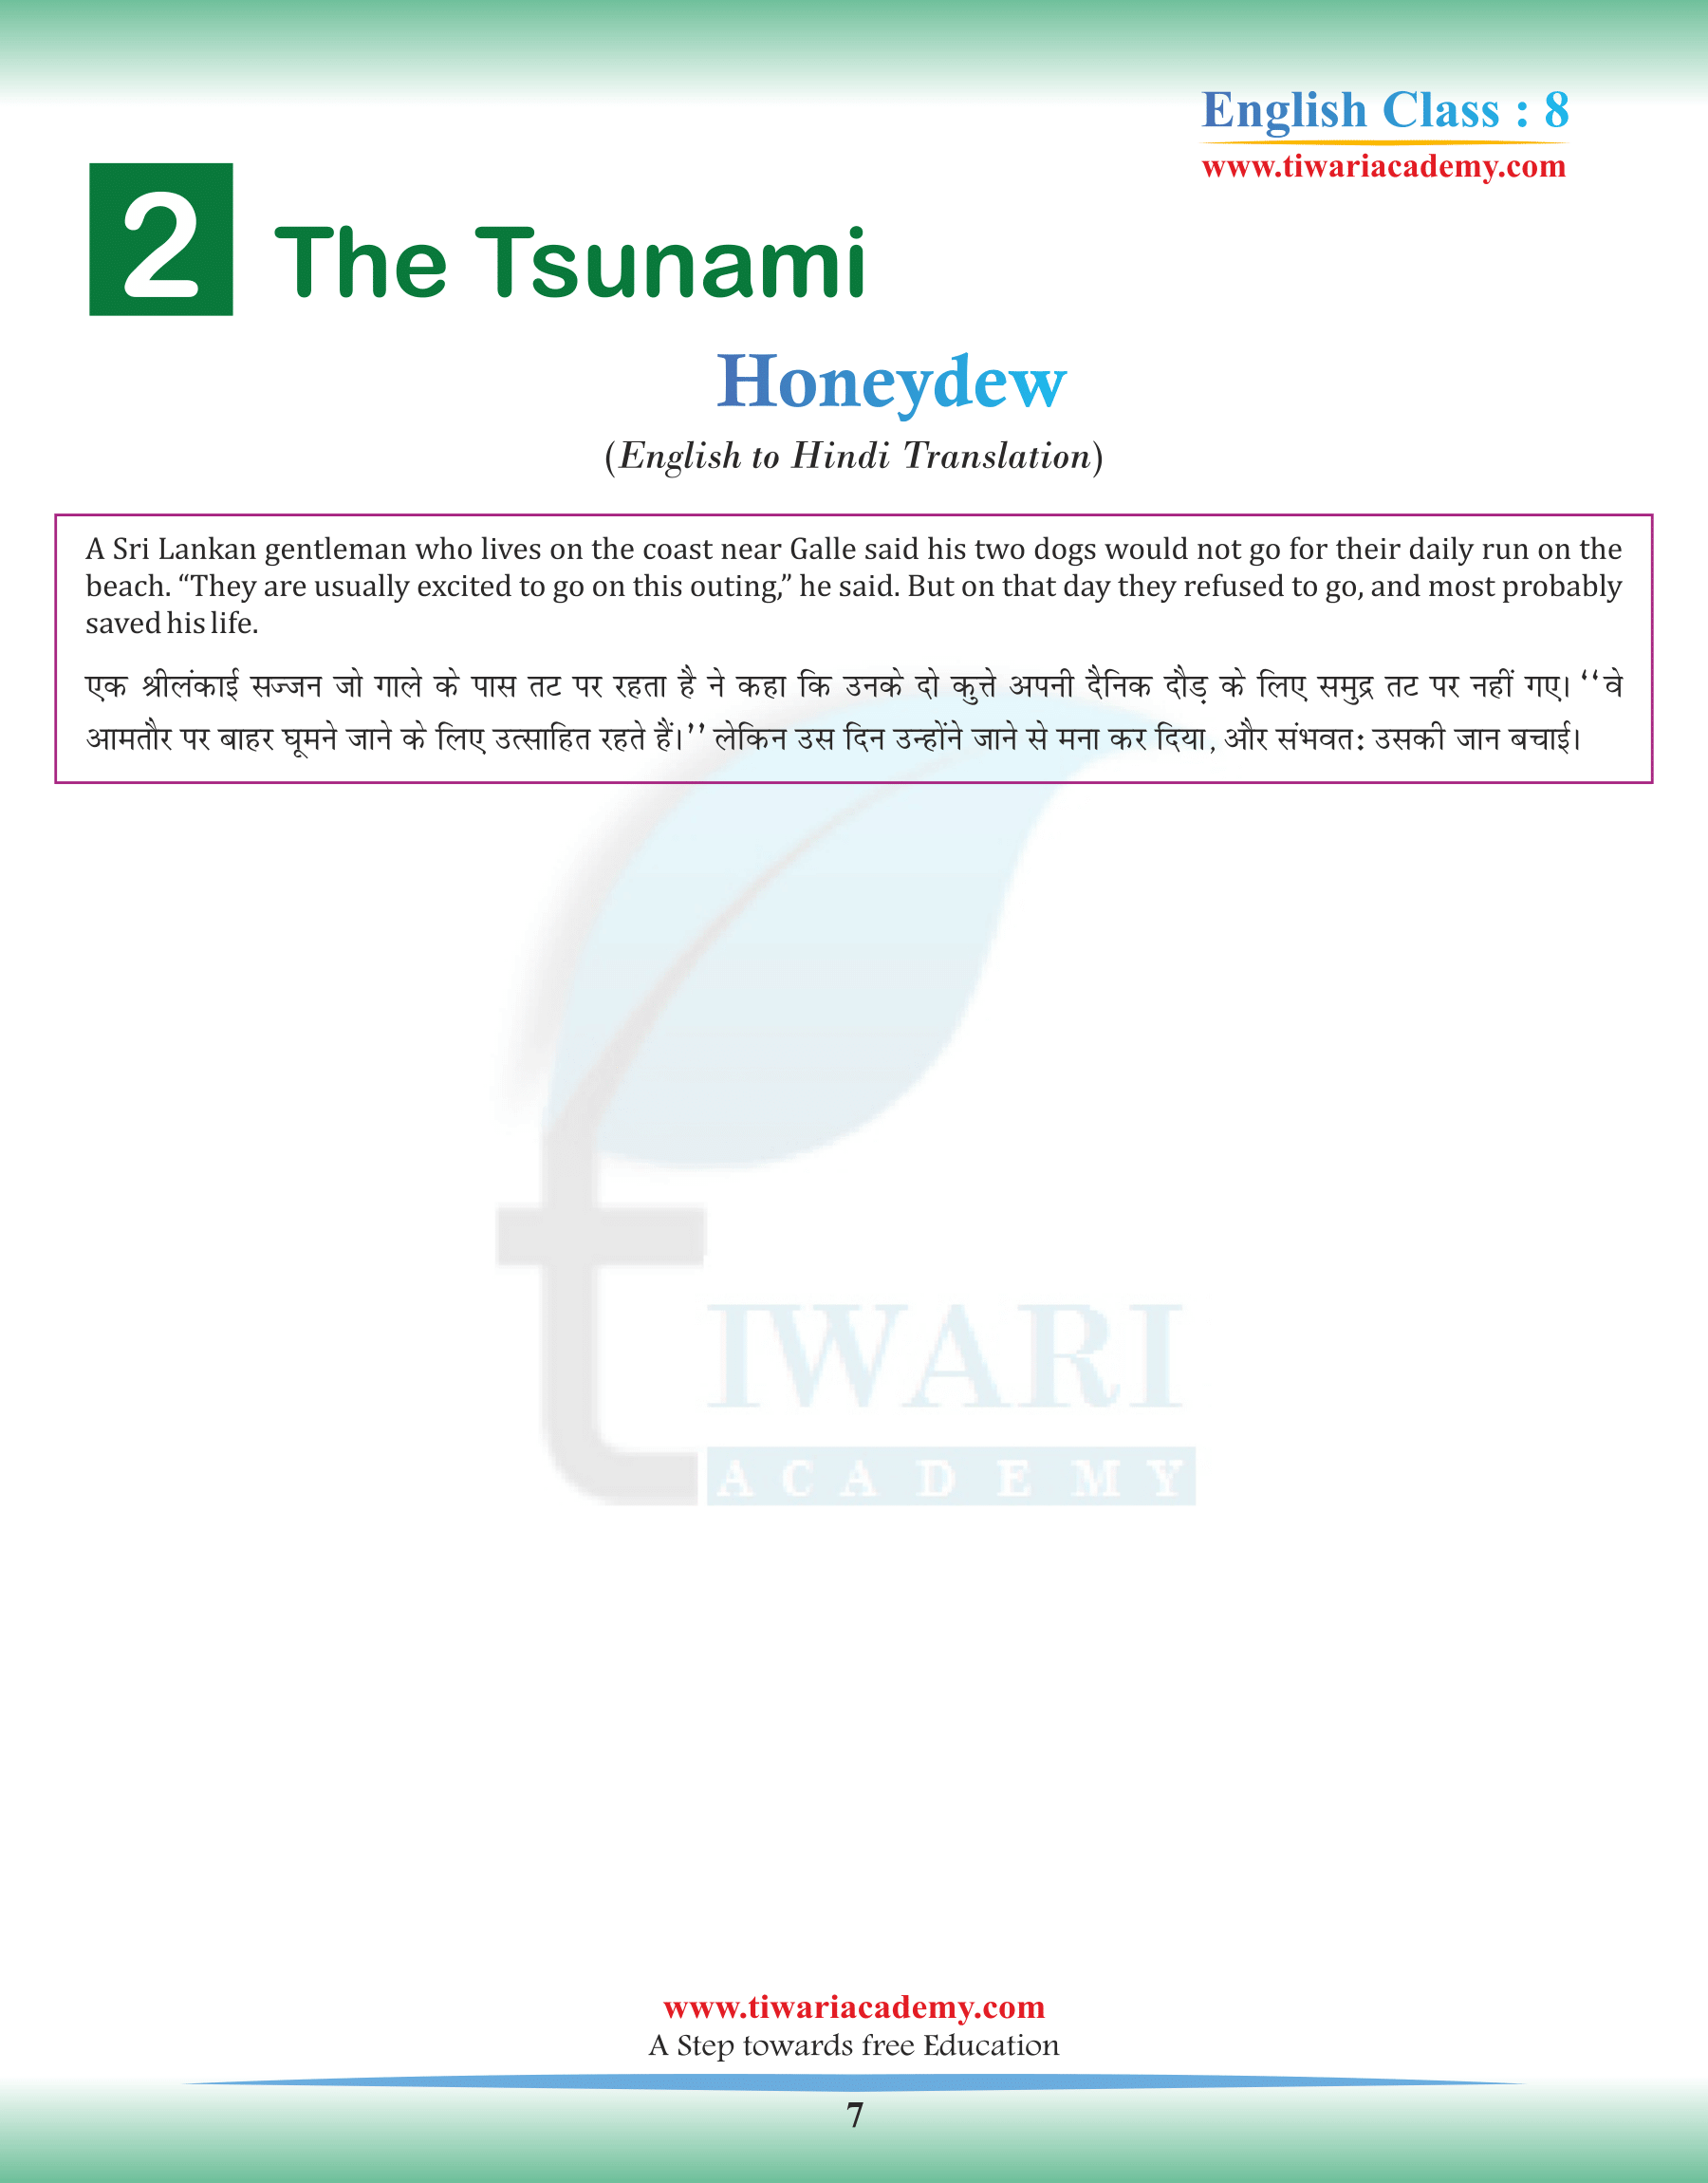 Hindi Translation of grade 8 English Honeydew Chapter 2 The Tsunami